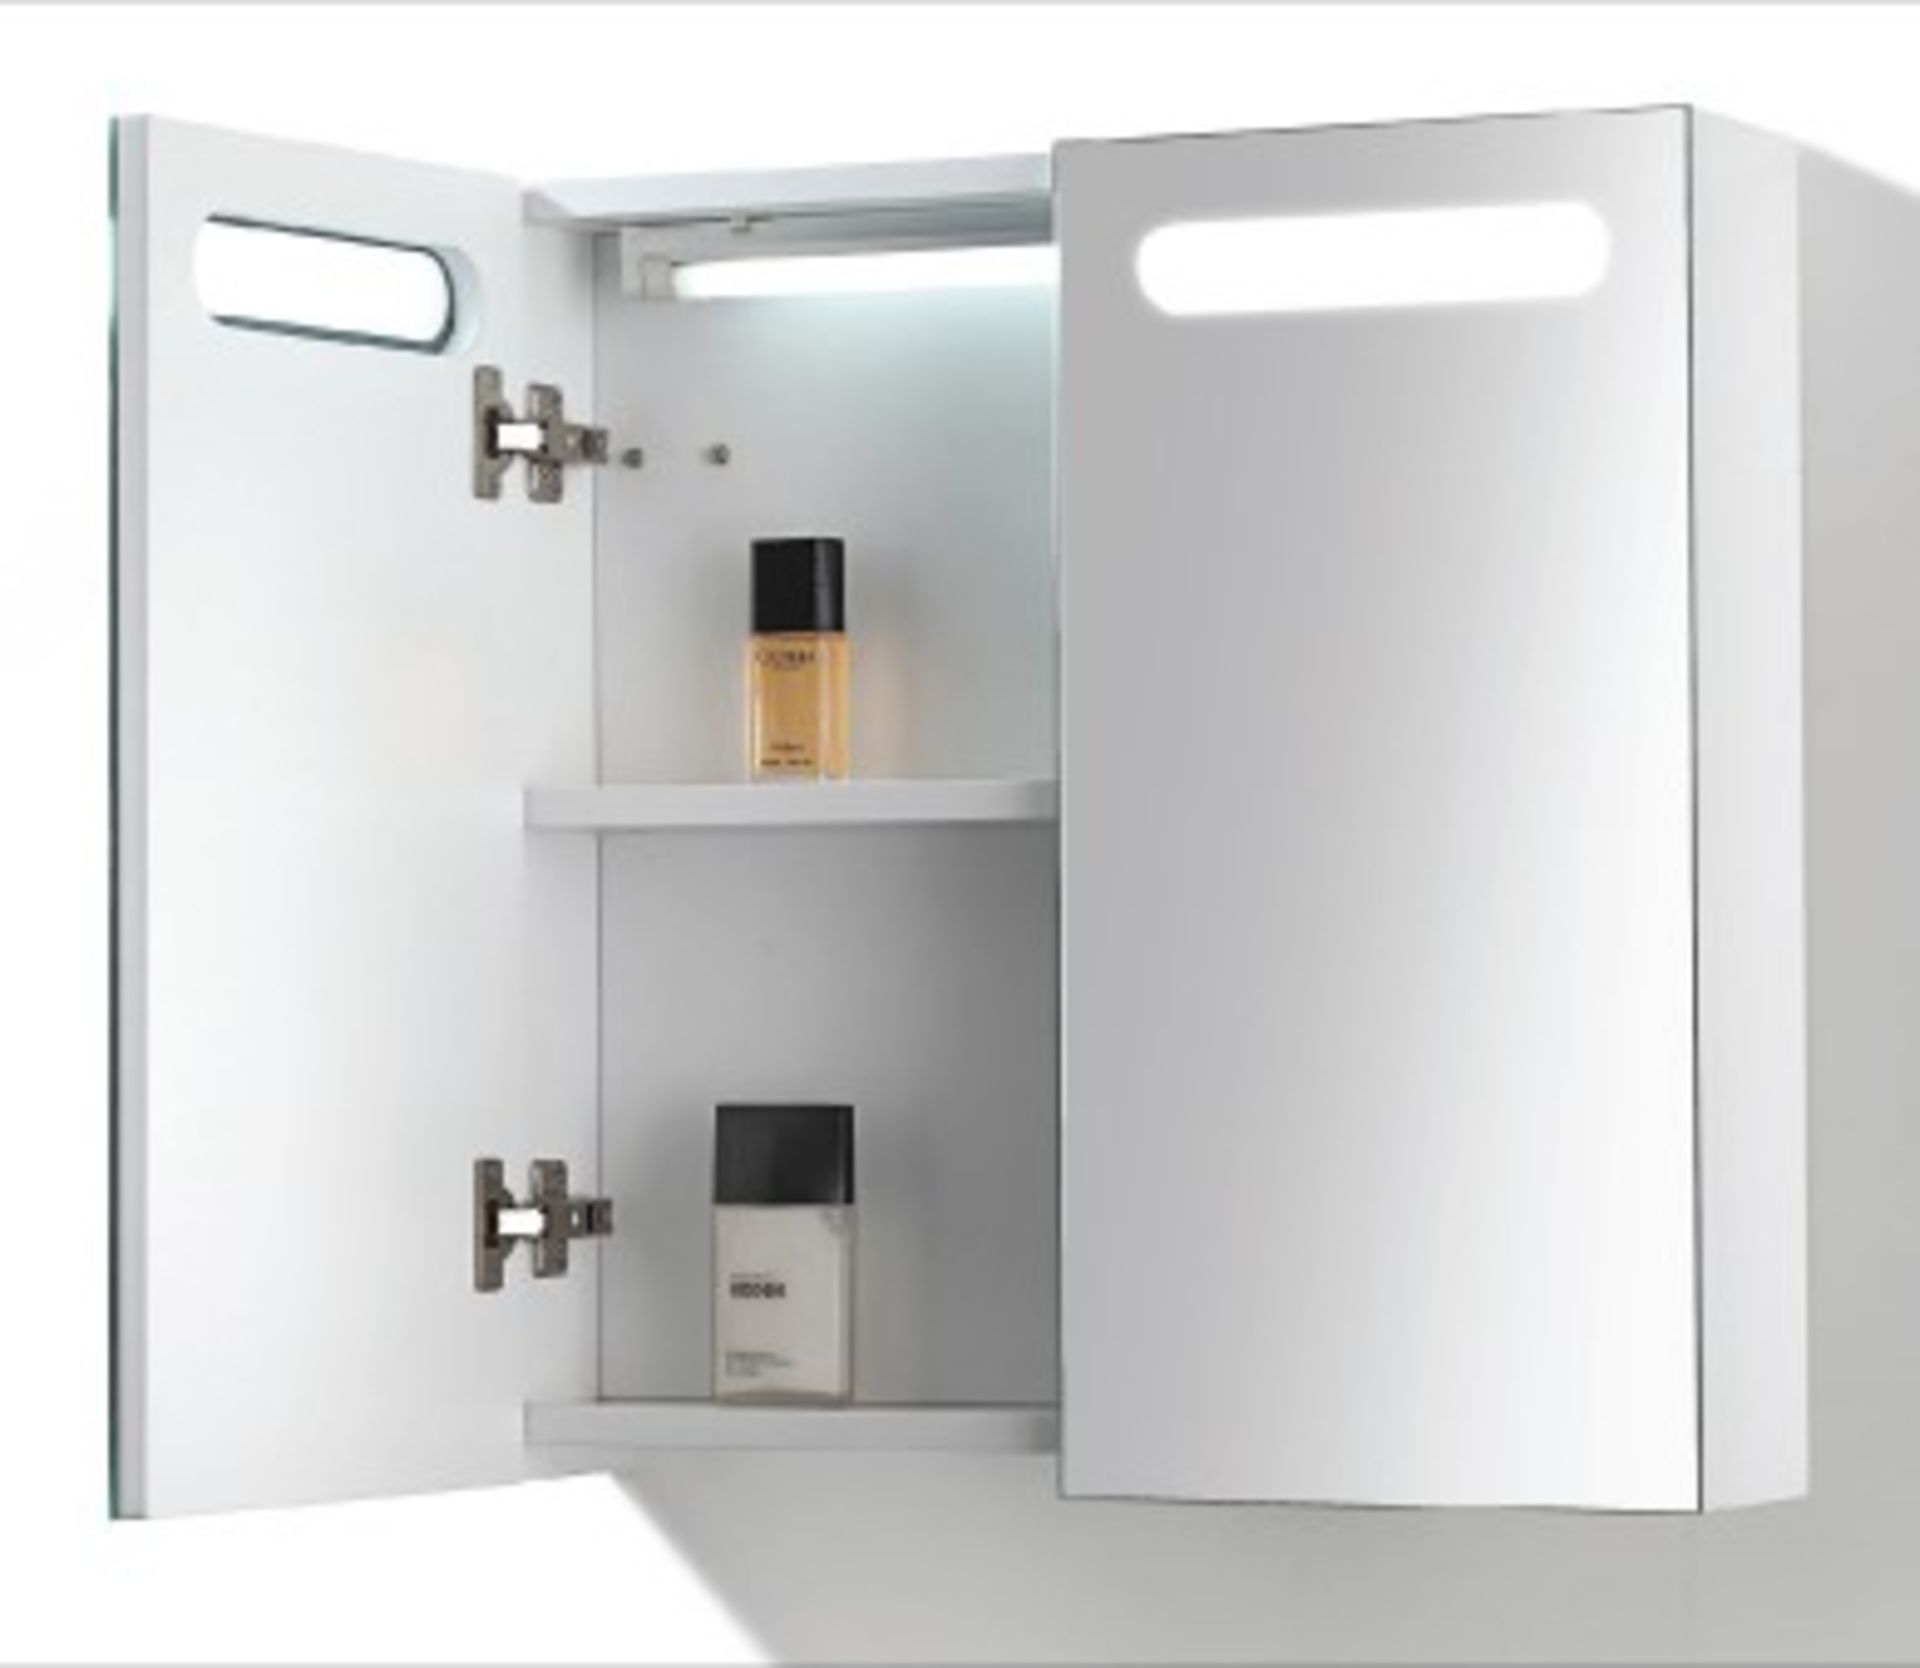 1 x Austin Bathrooms EDEN Two Door 450mm Mirrored Bathroom Cabinet - New and Boxed - RRP £290 - Ref: